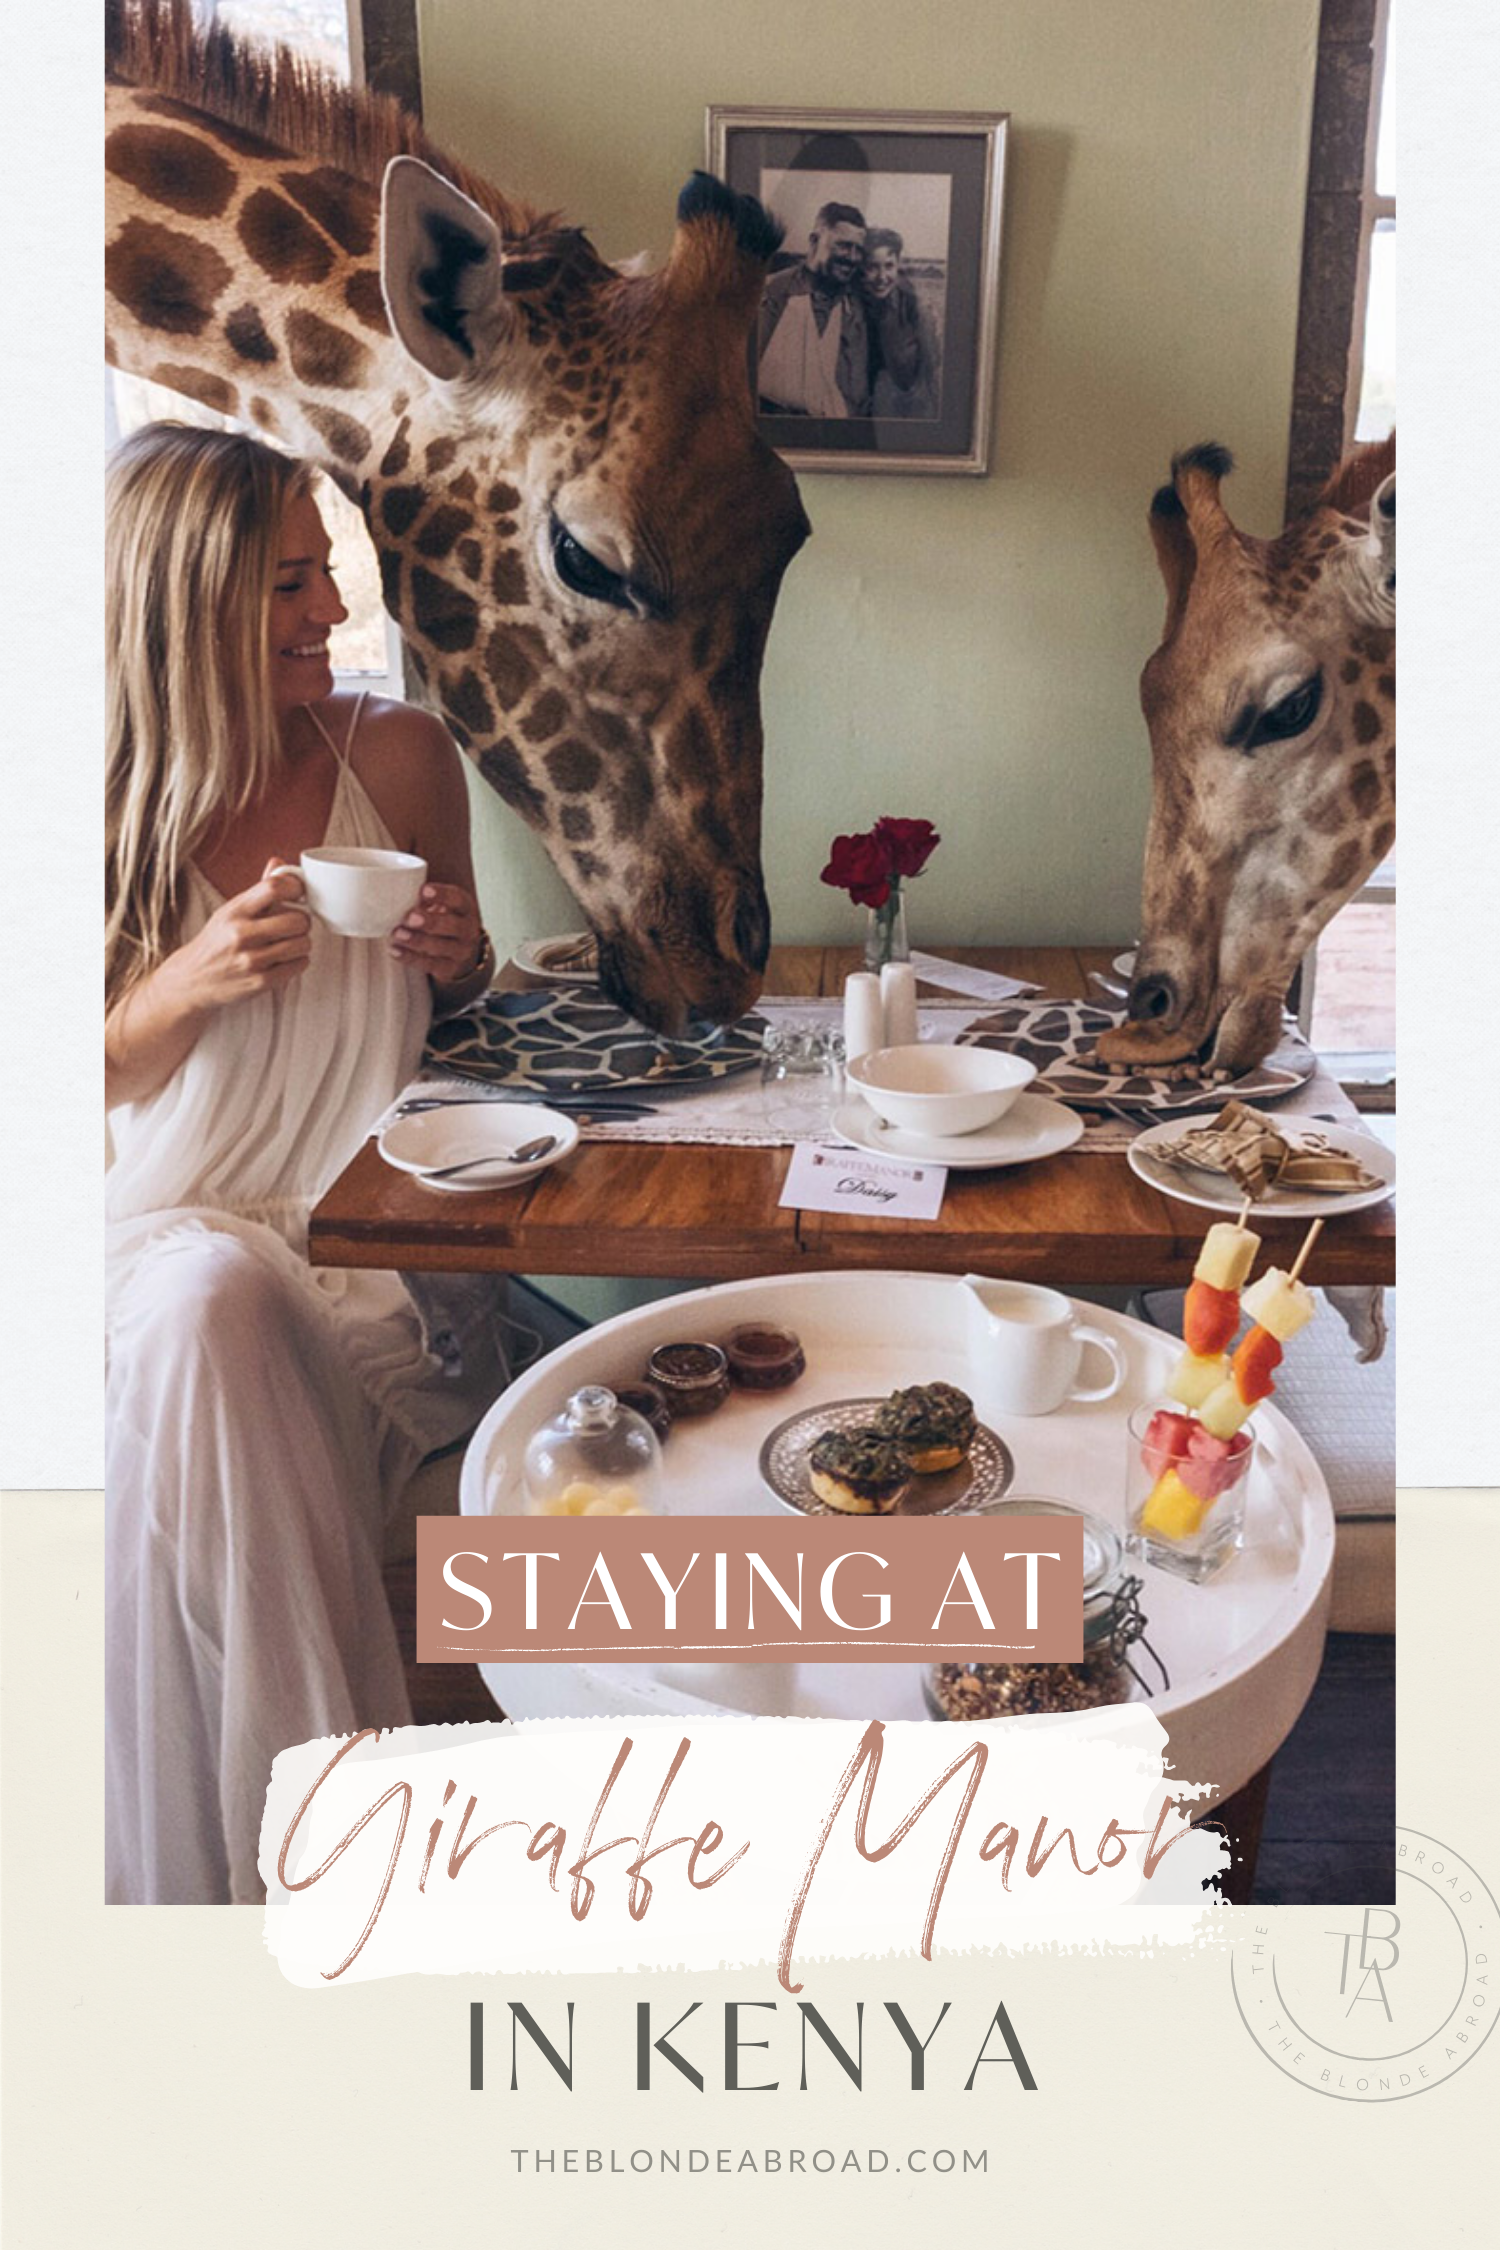 Staying at Giraffe Manor in Kenya